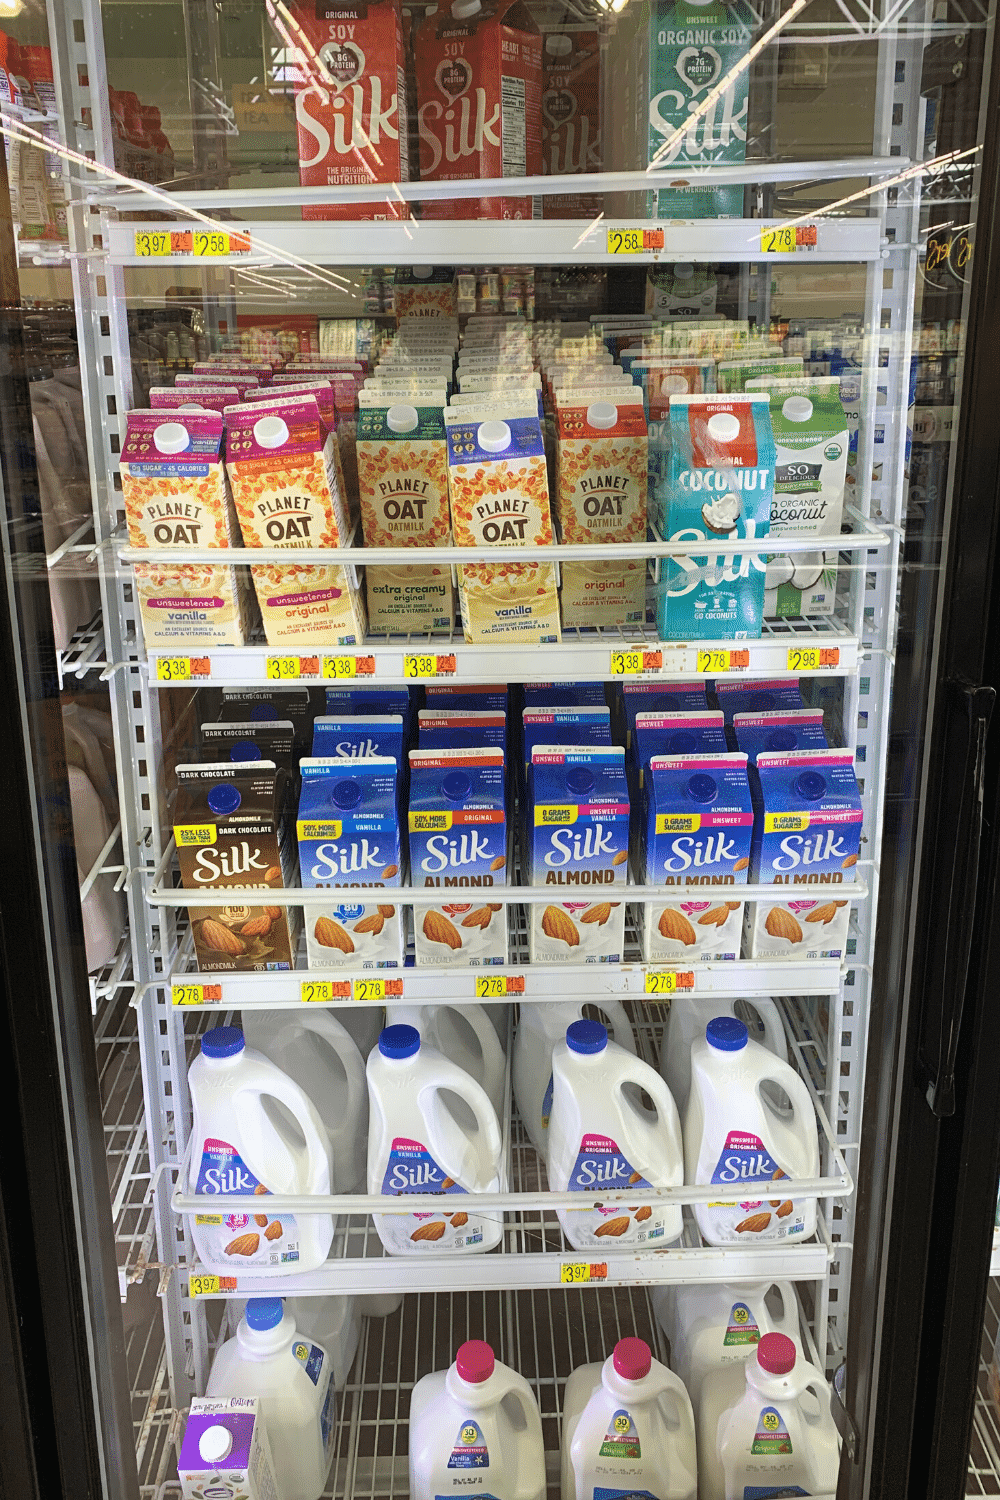 The plant-based milk refrigerator at Walmart.